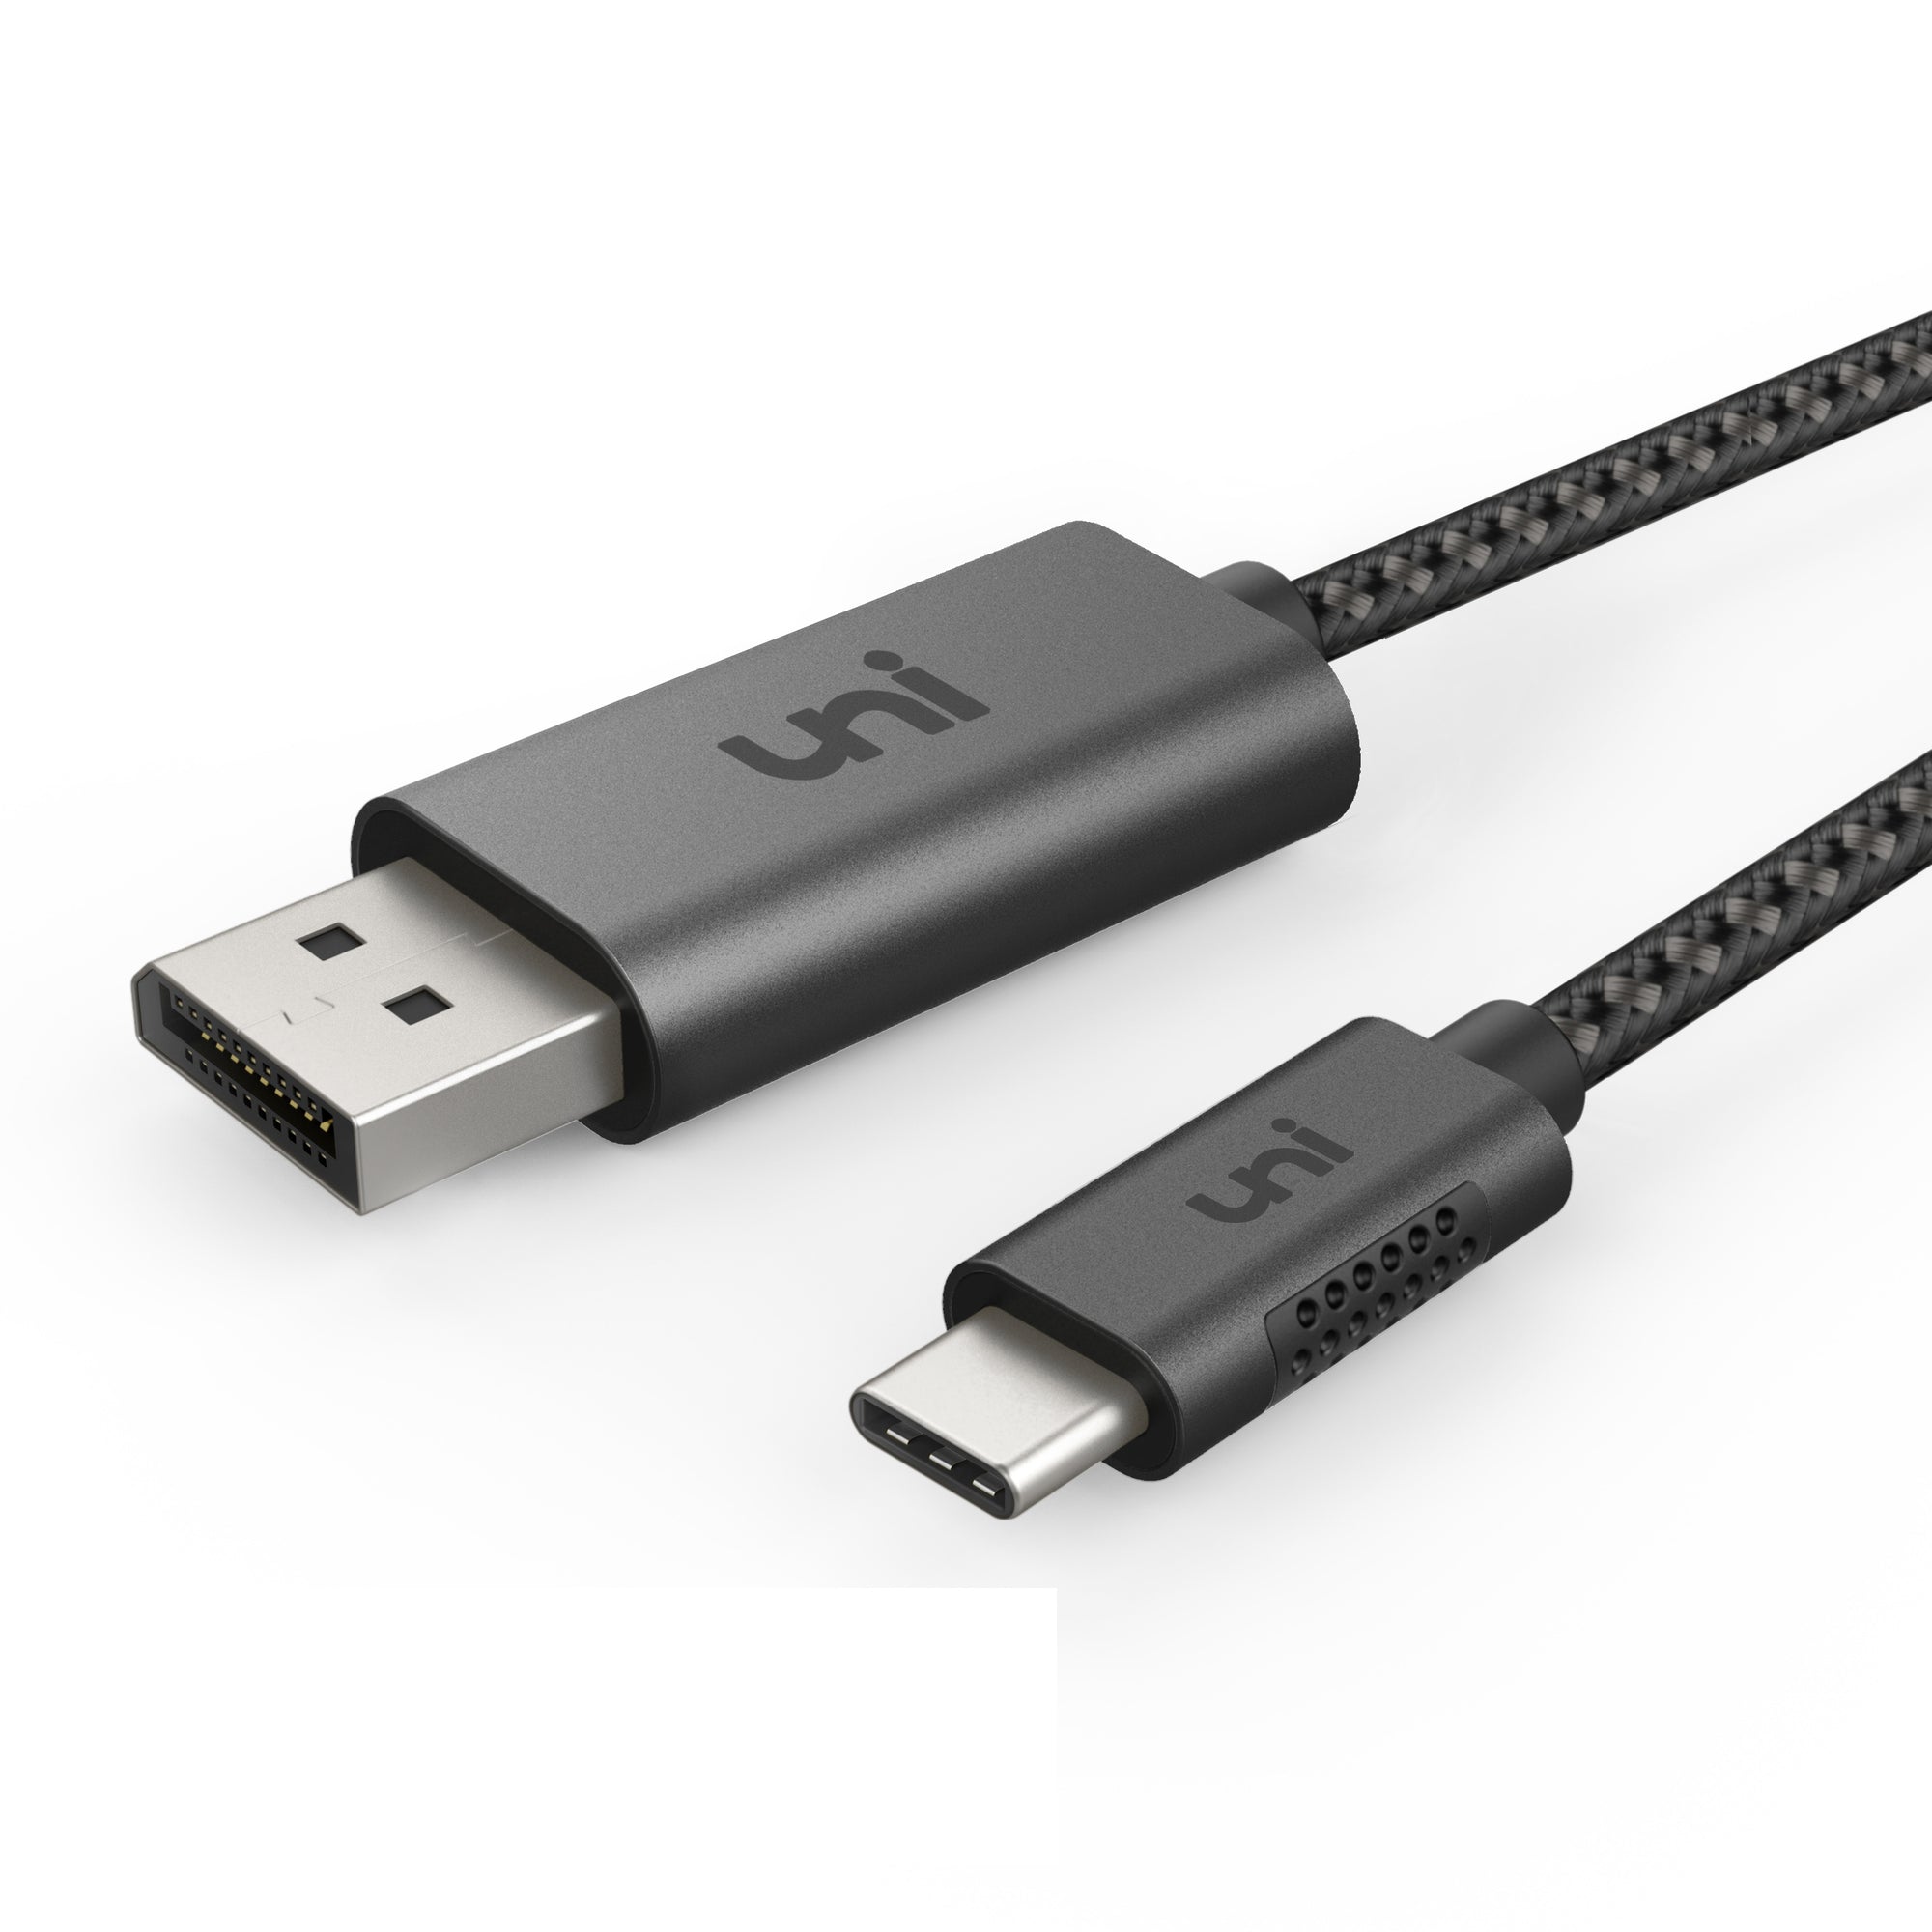 Adaptateur USB type-C vers VGA DVI HDMI et USB cable 4 in 1